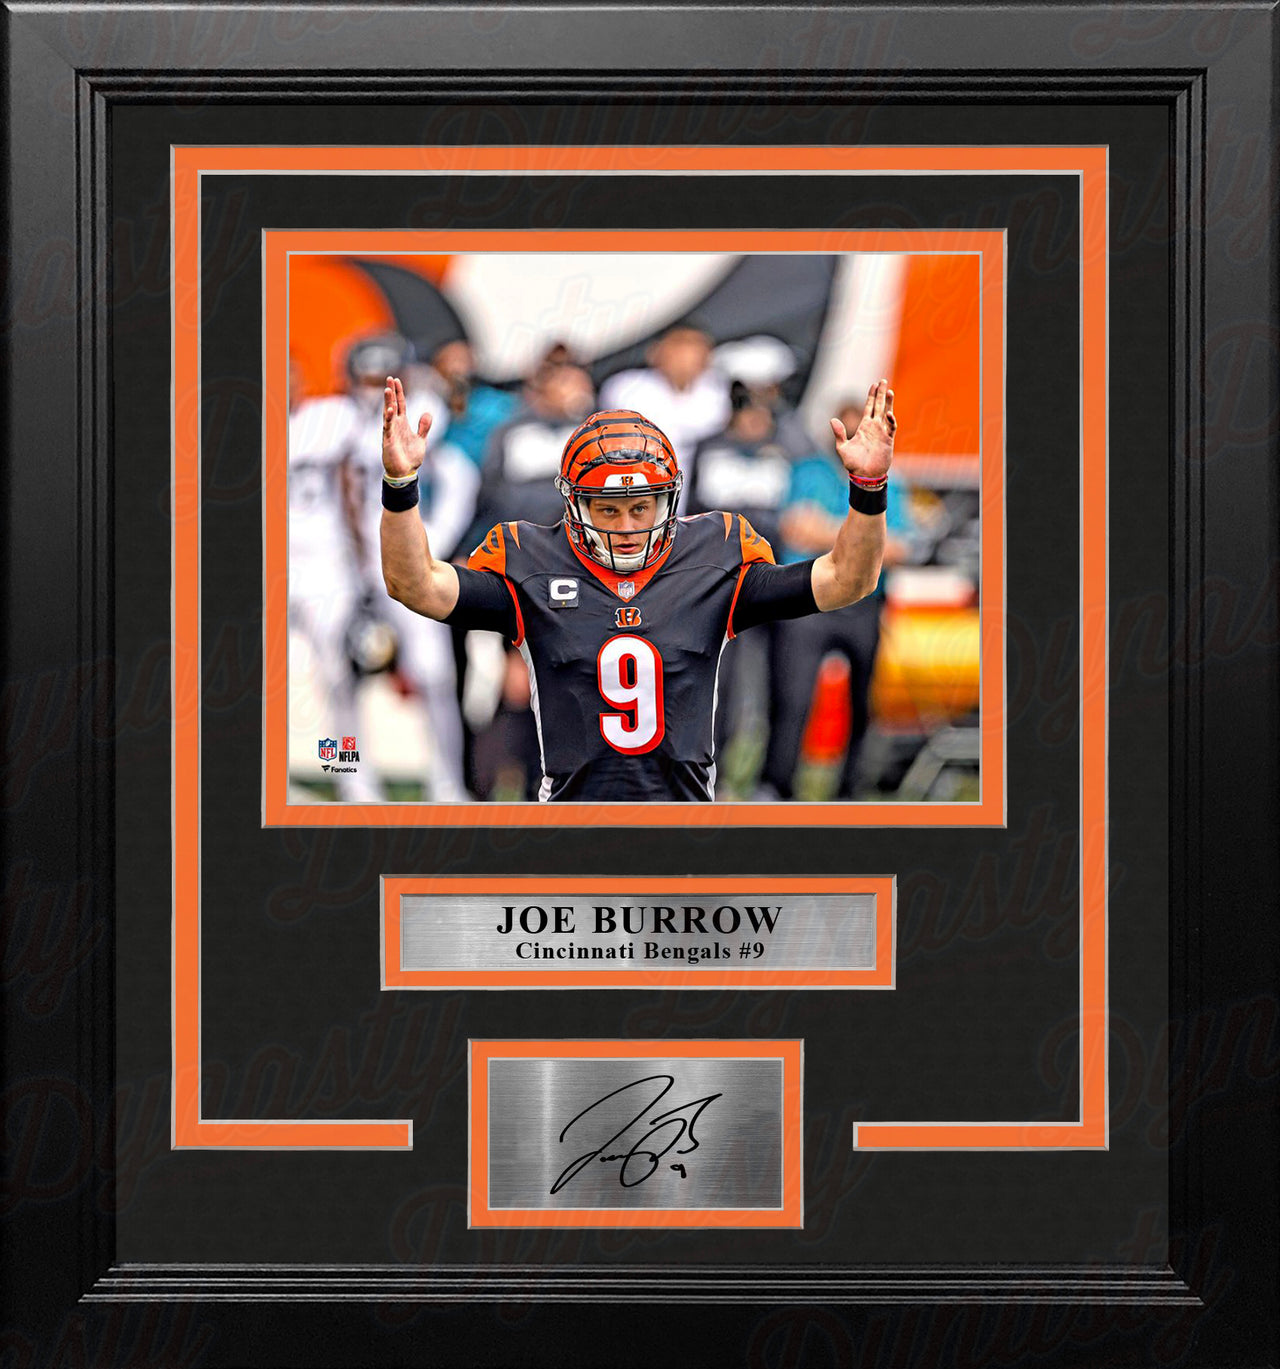 Joe Burrow Arms Up Cincinnati Bengals 8" x 10" Framed Football Photo with Engraved Autograph